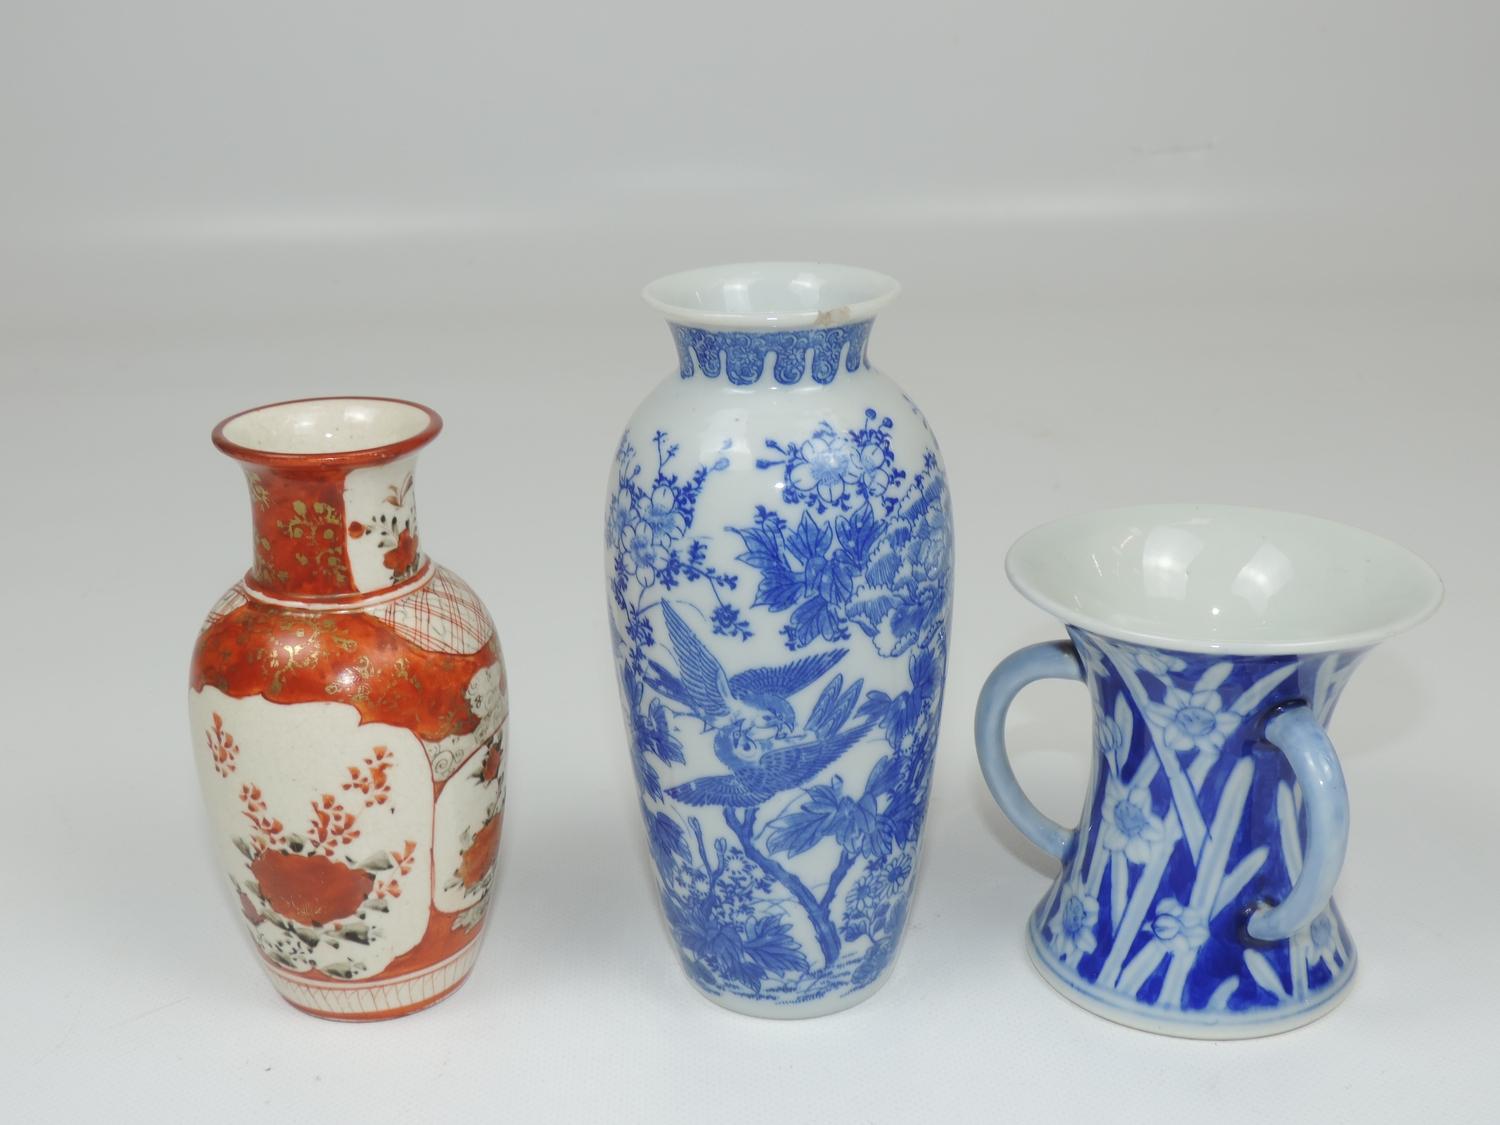 3x Small Oriental Vases - 2x Blue and White 1x Orange and White